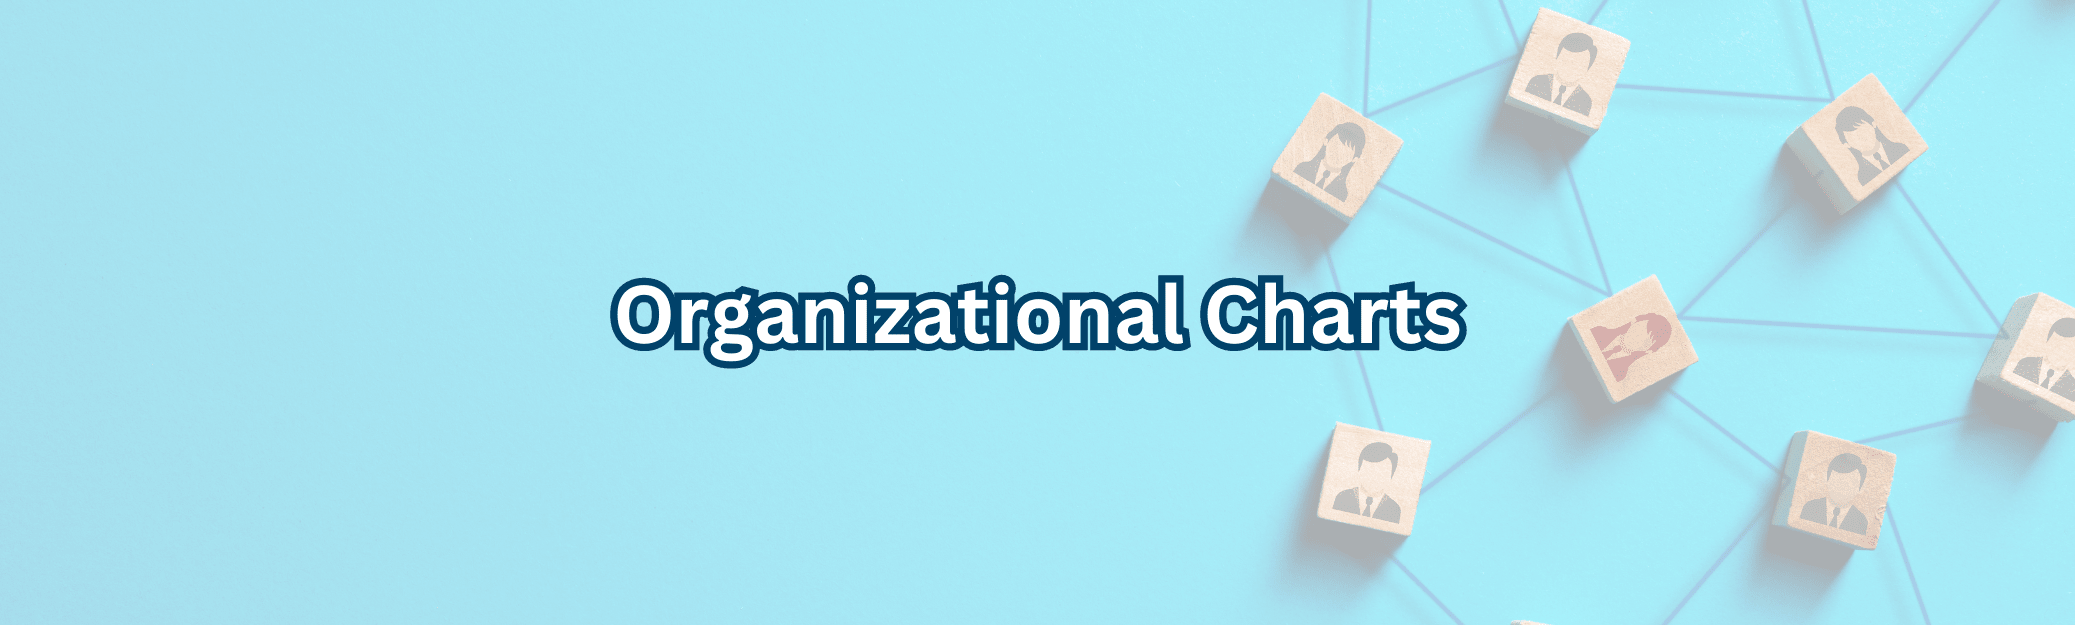 Organizational Charts banner